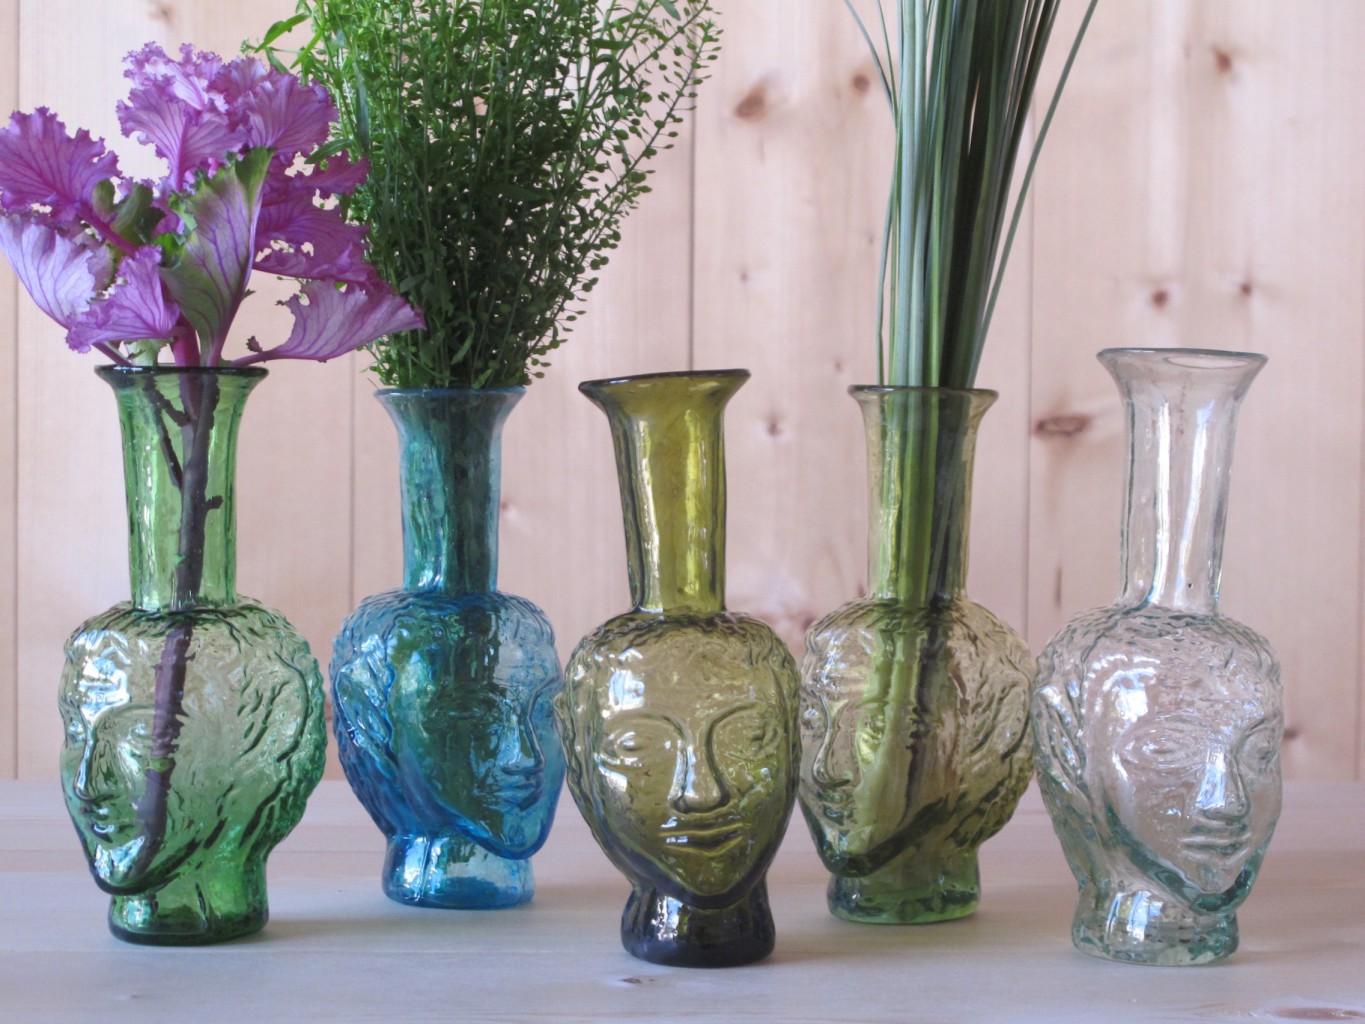 La Soufflerie glass head vase, £35.99 from Trouva